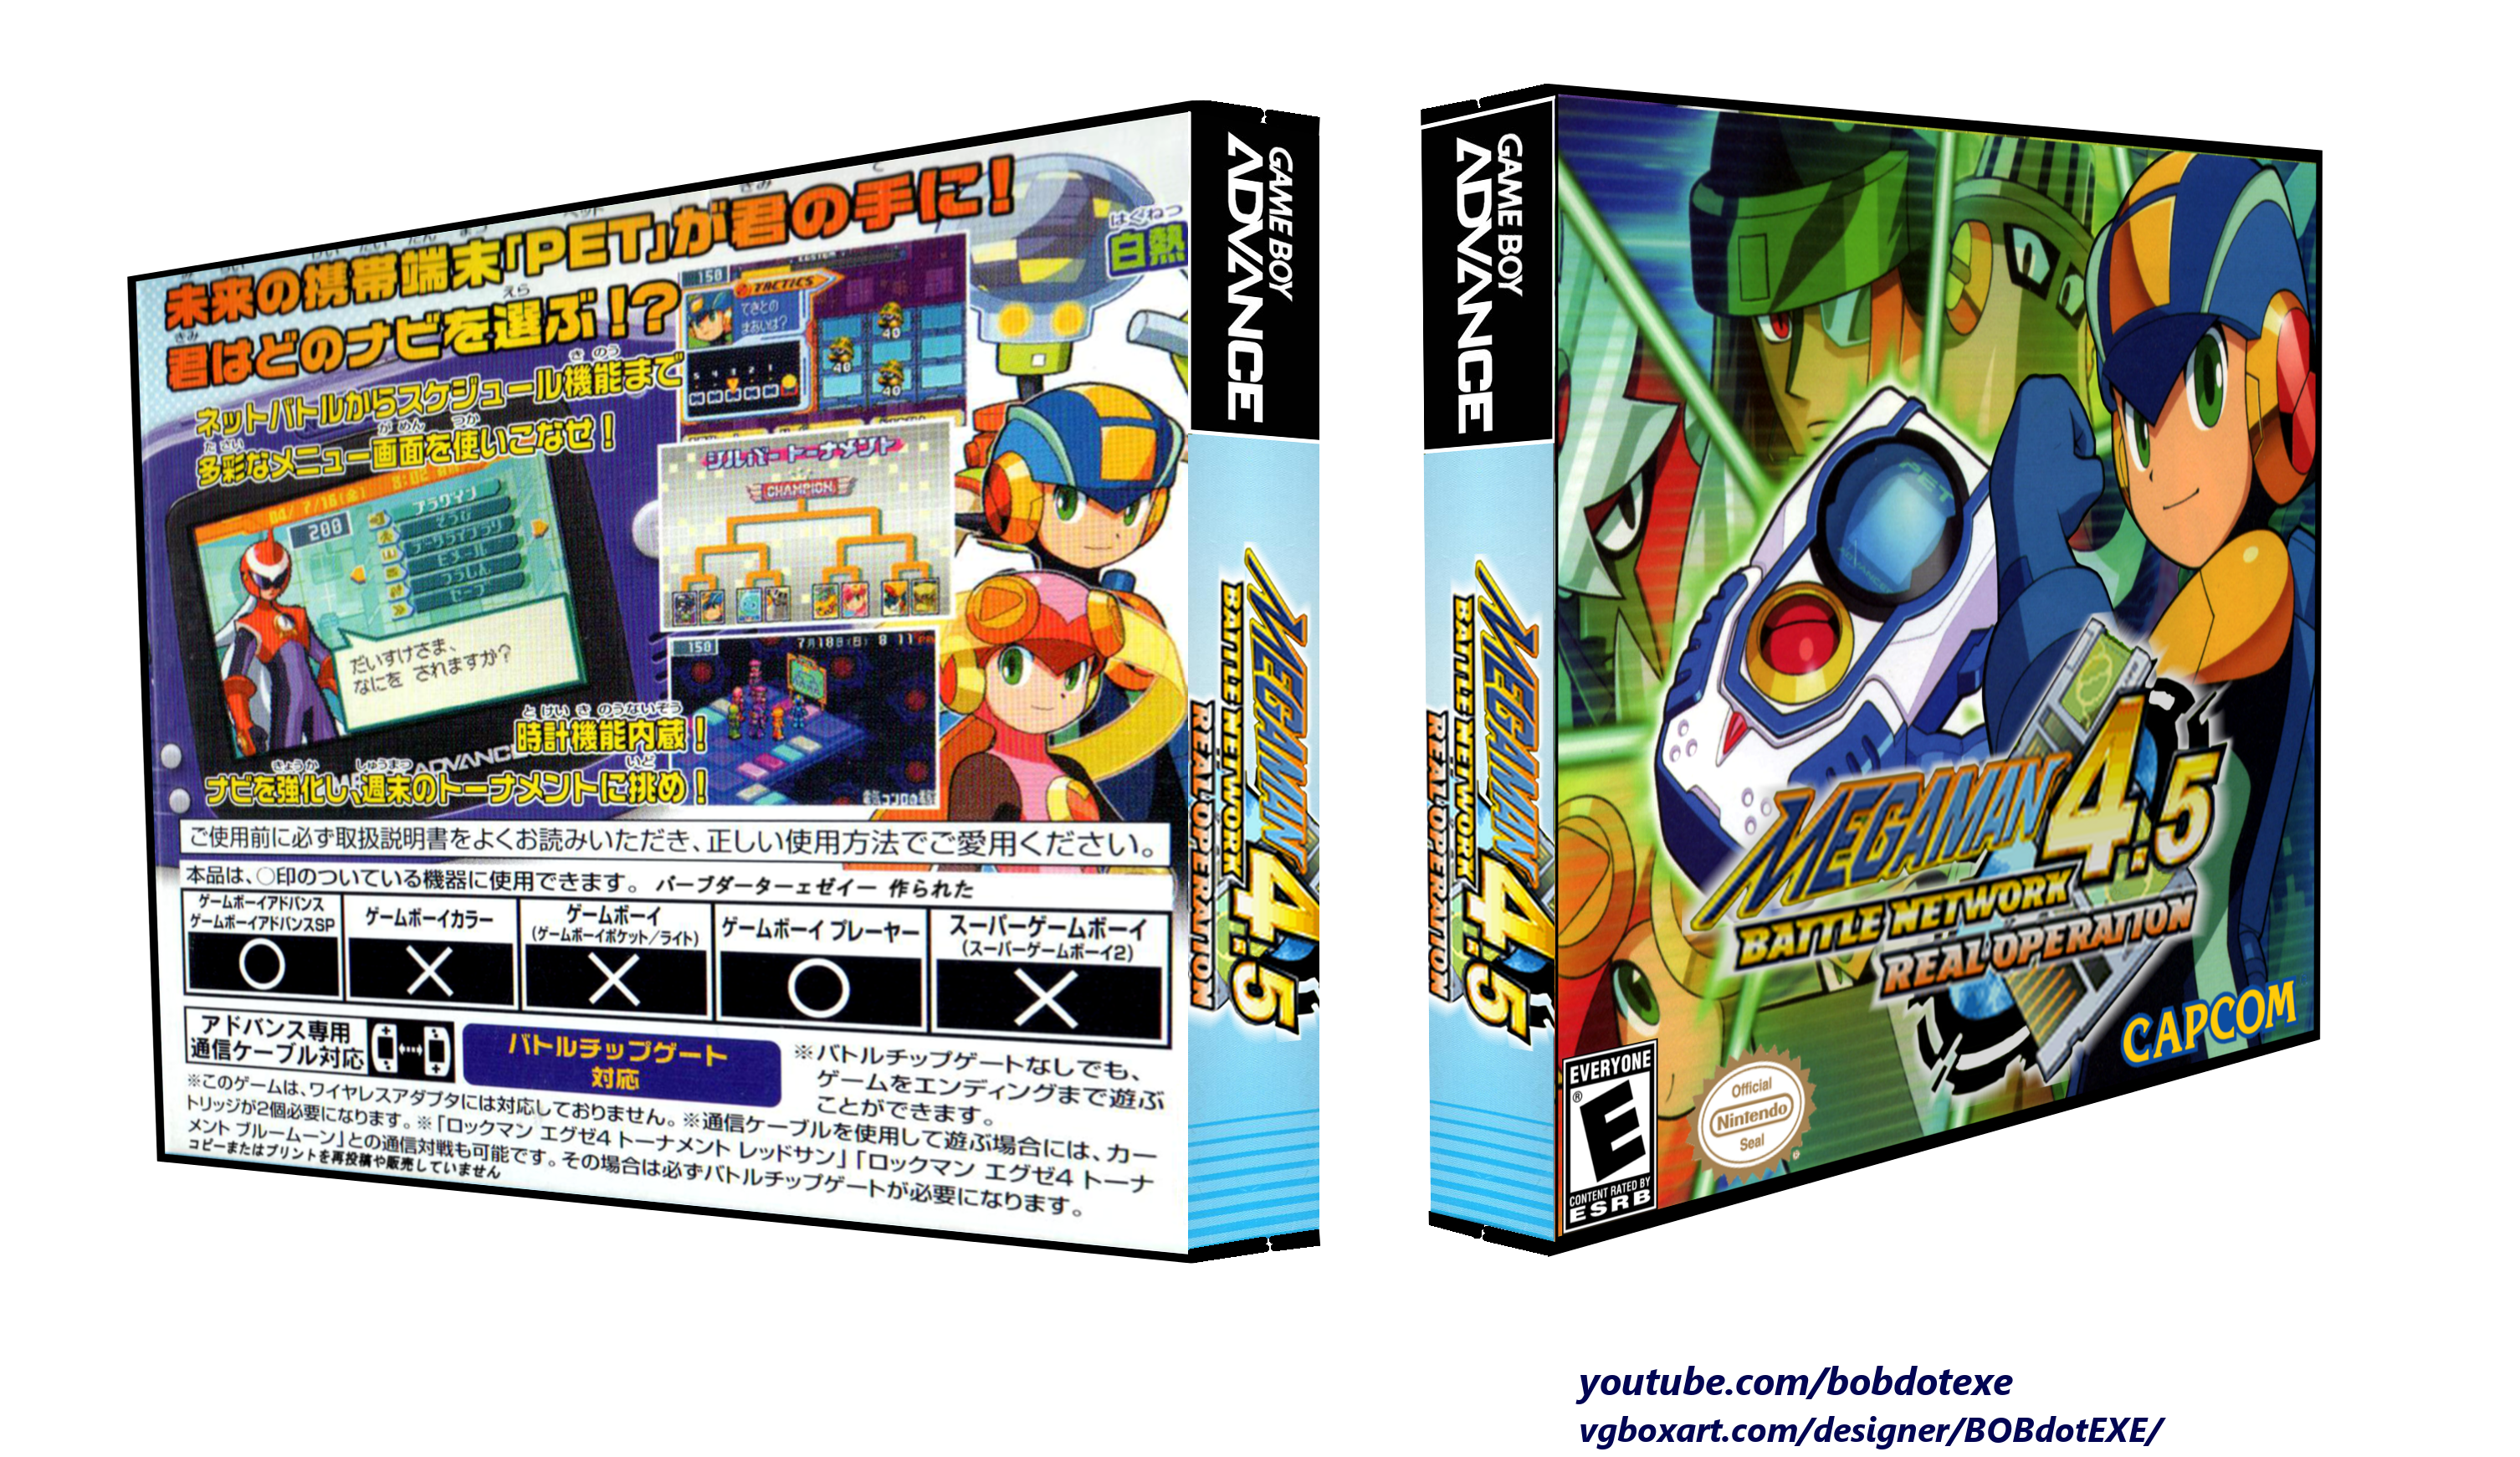 Megaman battle network 4.5 box cover